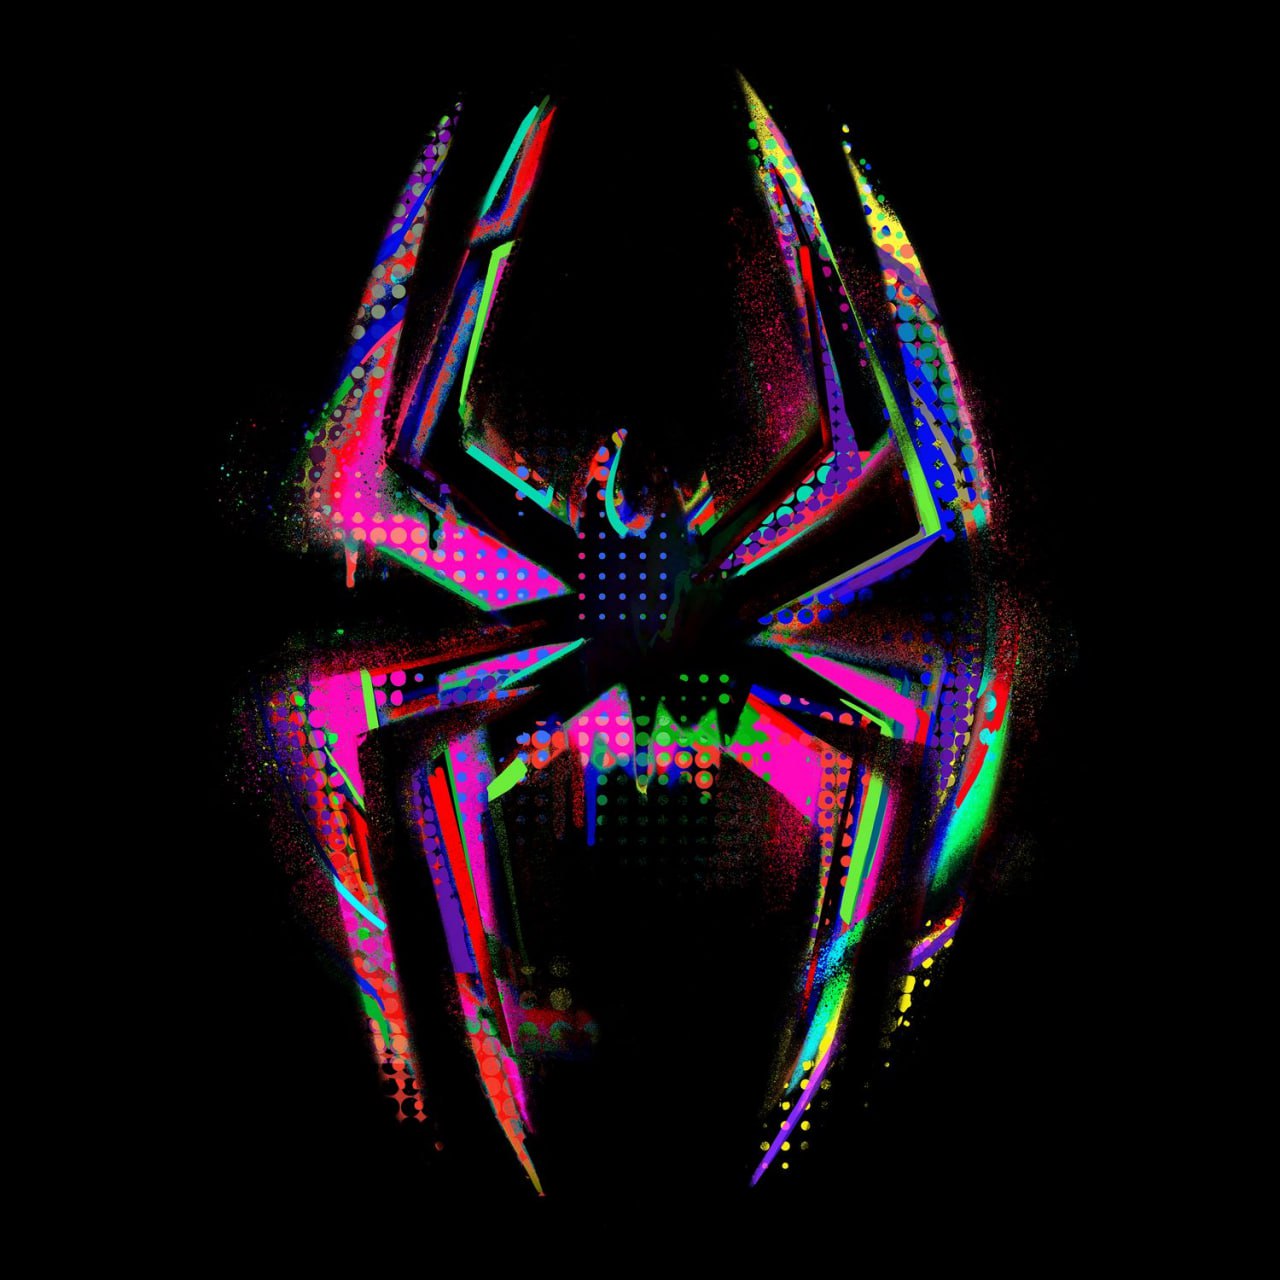 Calling (Spider-Man Across the Spider-Verse) - Metro Boomin ft. Swae Lee, NAV & A Boogie wit da Hoodie